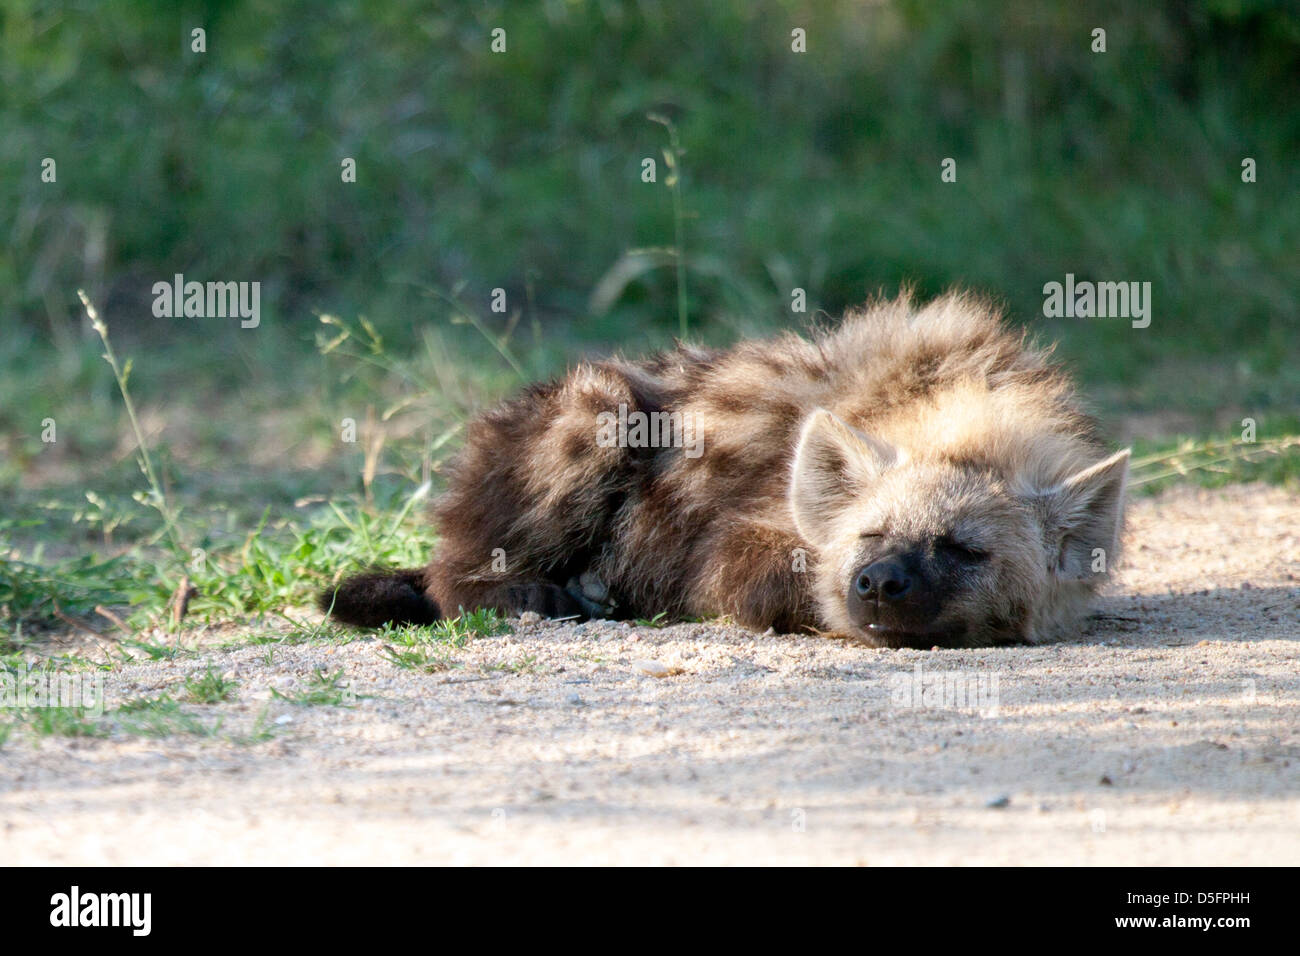 Snoozing hyena on road Stock Photo